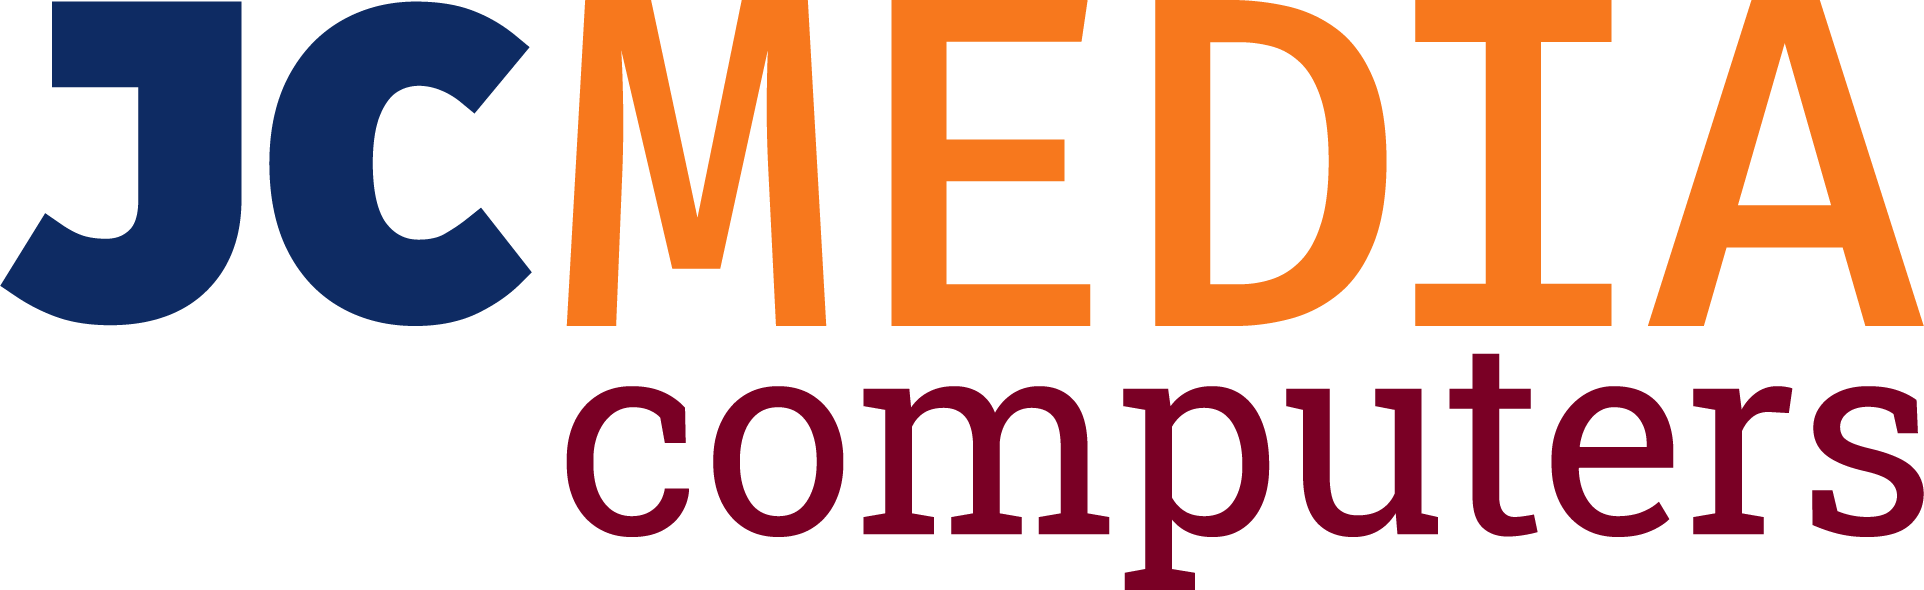 jcmedia_logo_comp